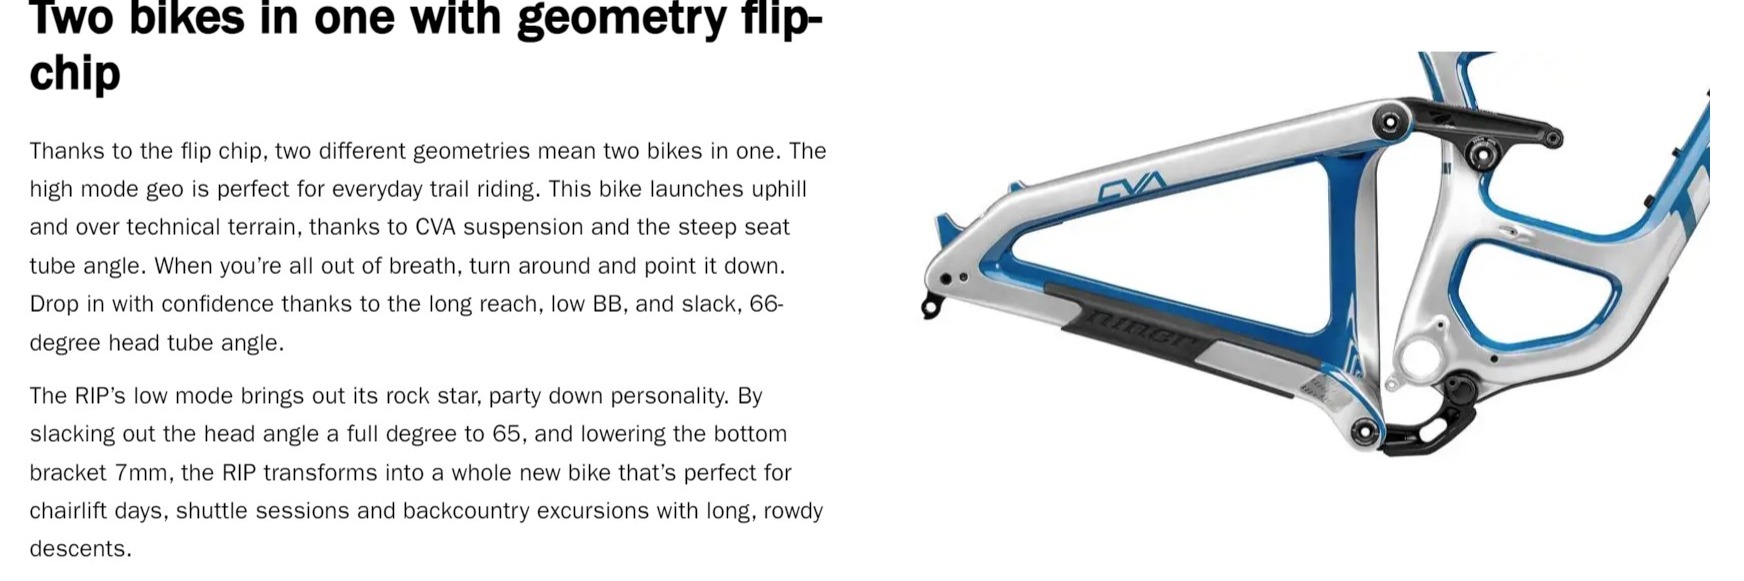 2 bikes in 1 with geometry flip